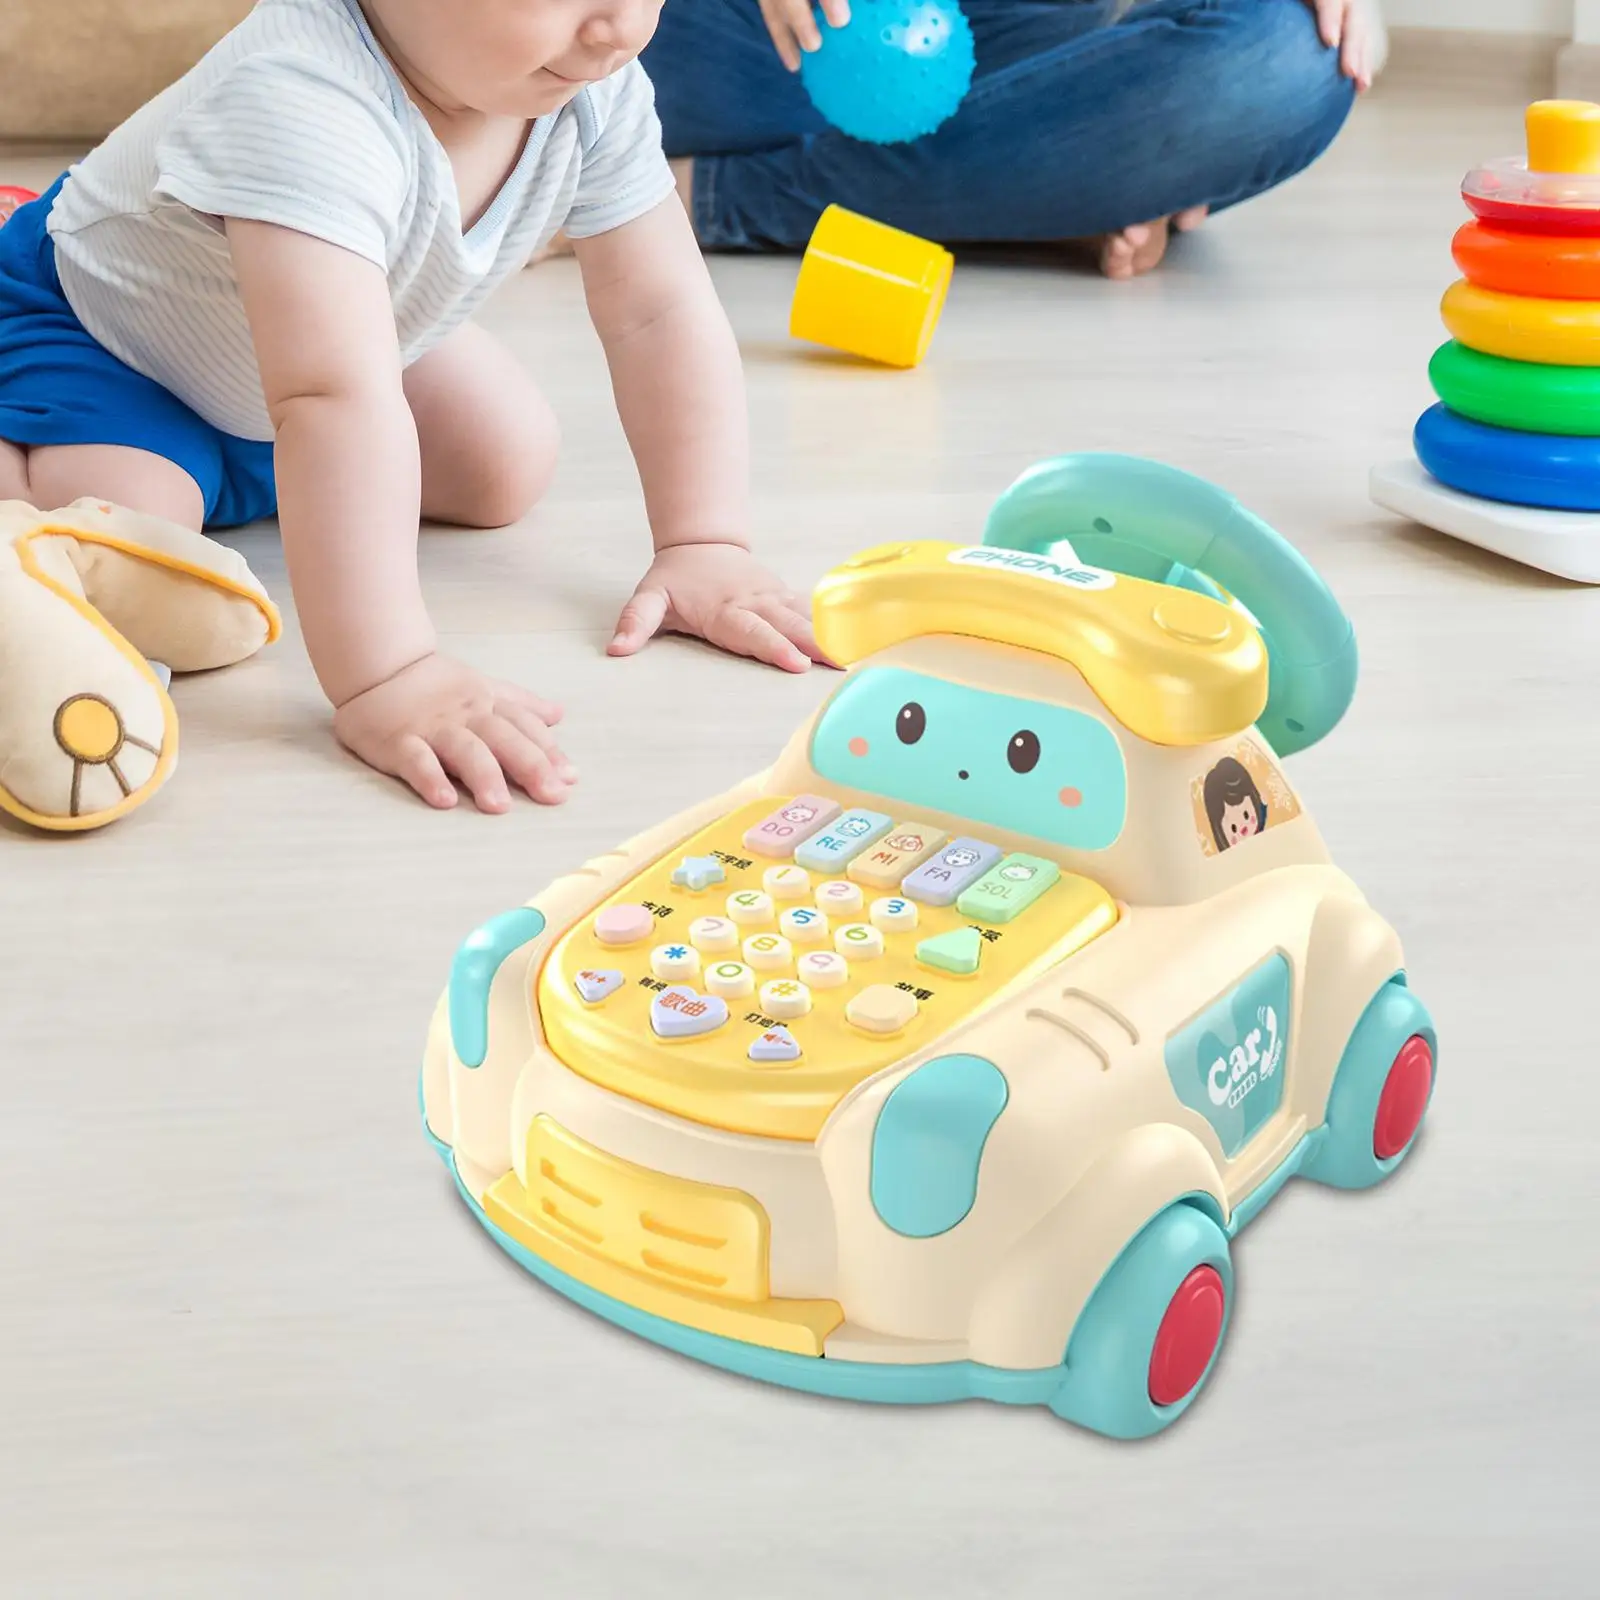 Baby Telephone Toy Children Phone Toy for Preschool Development Interaction